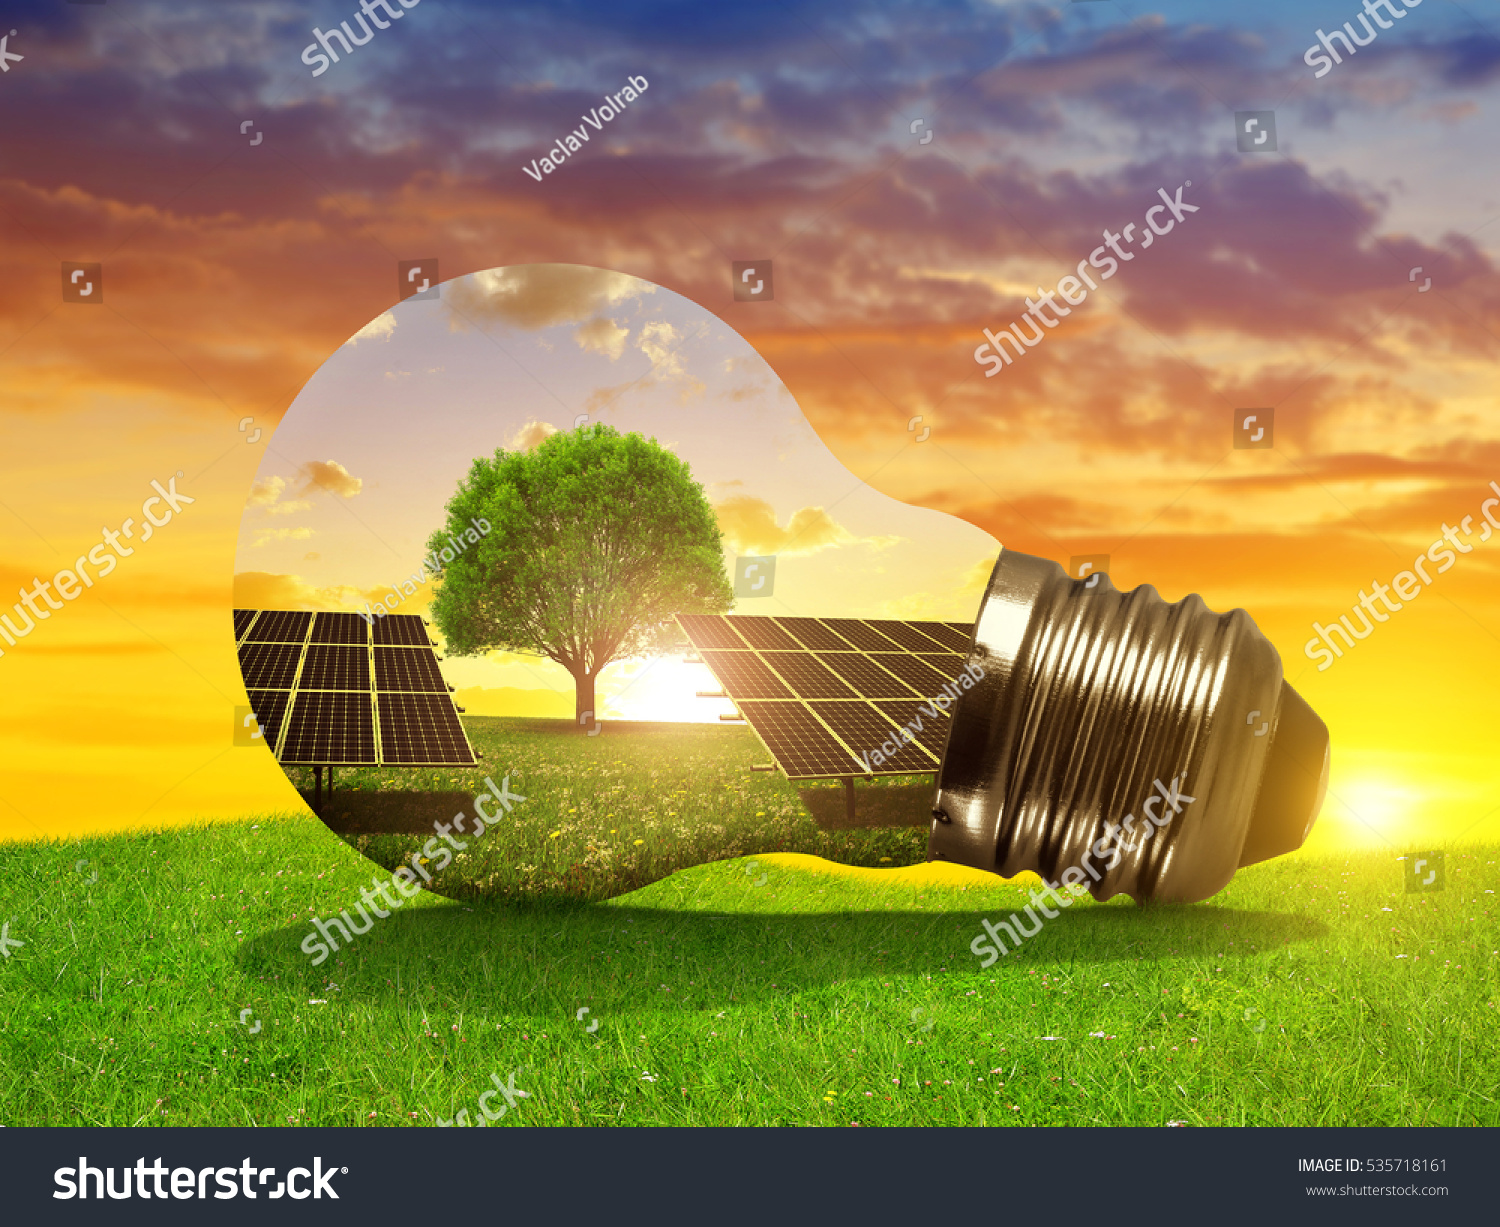 powerpoint-template-renewable-energy-environment-solar-mkmoipini